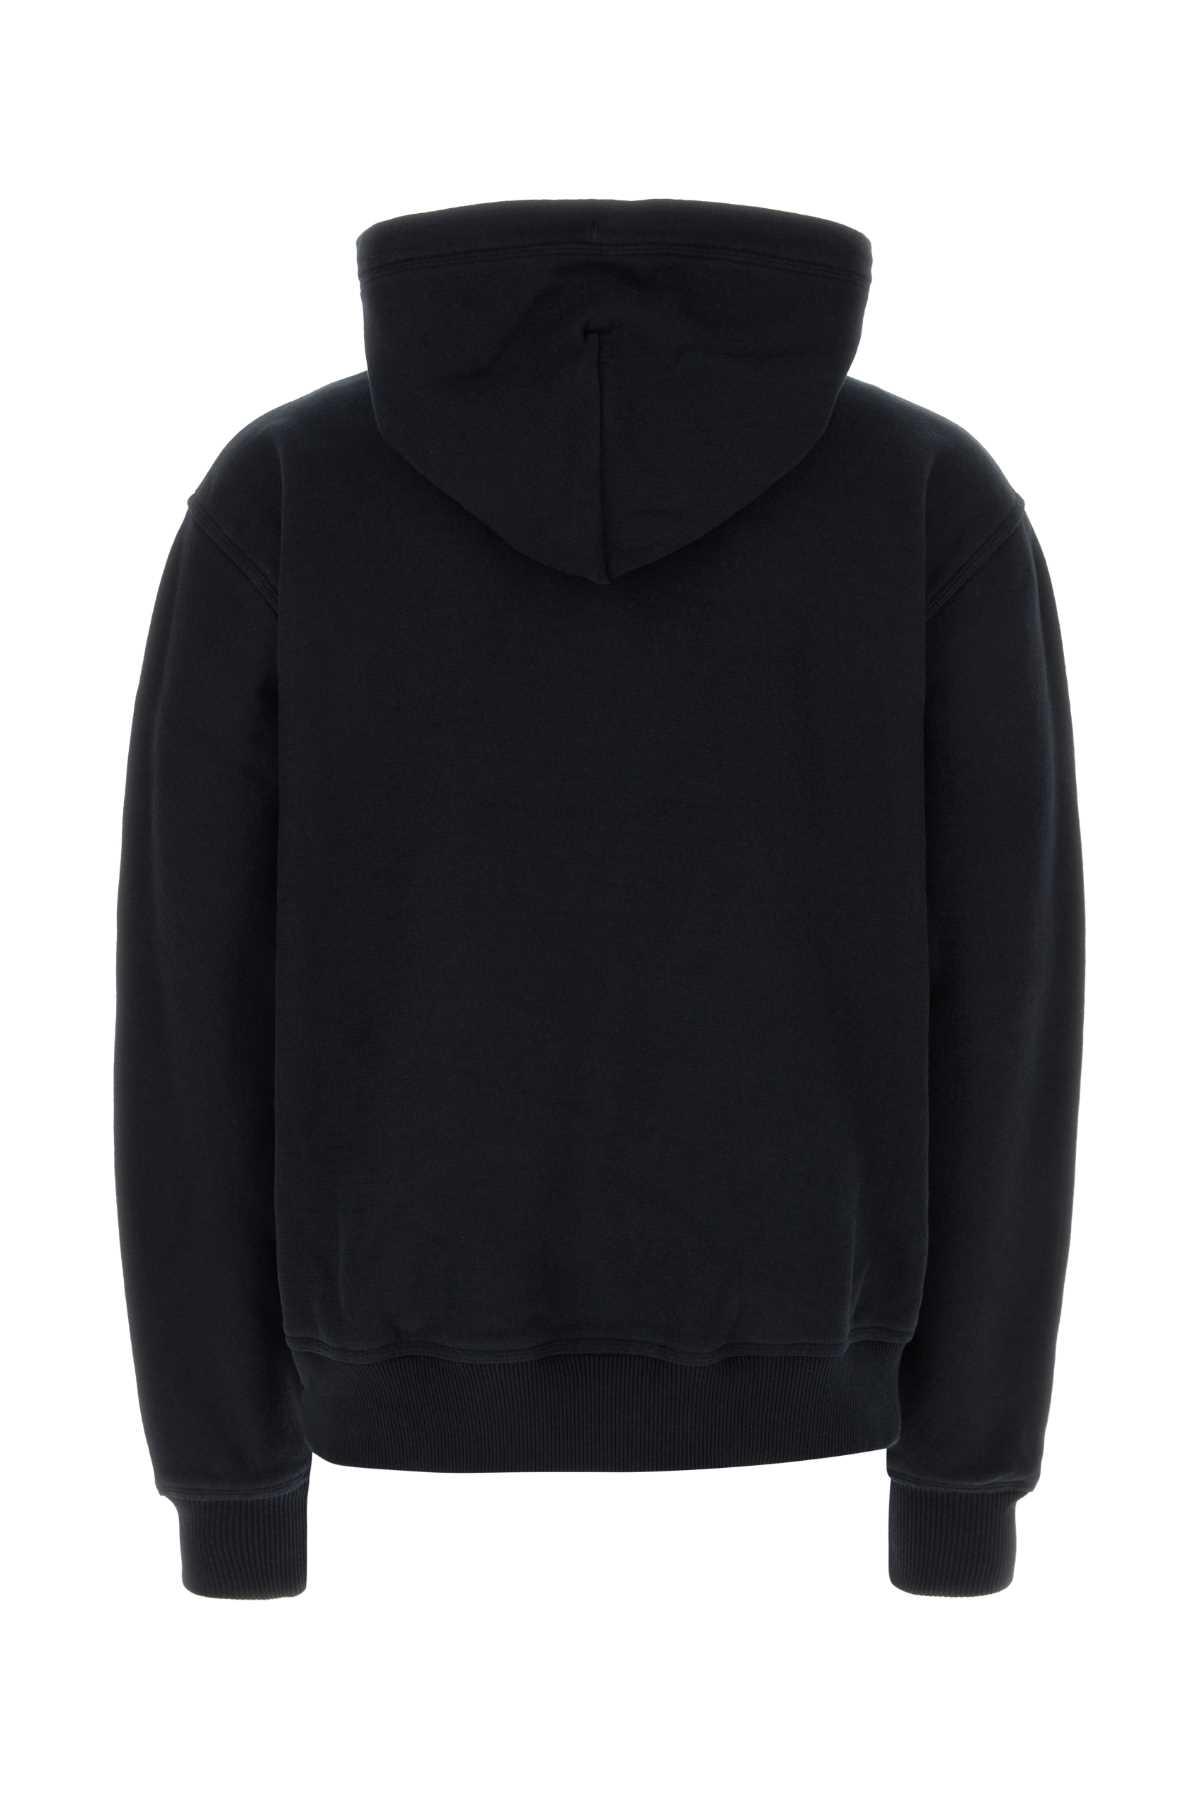 Shop Burberry Black Cotton Oversize Sweatshirt